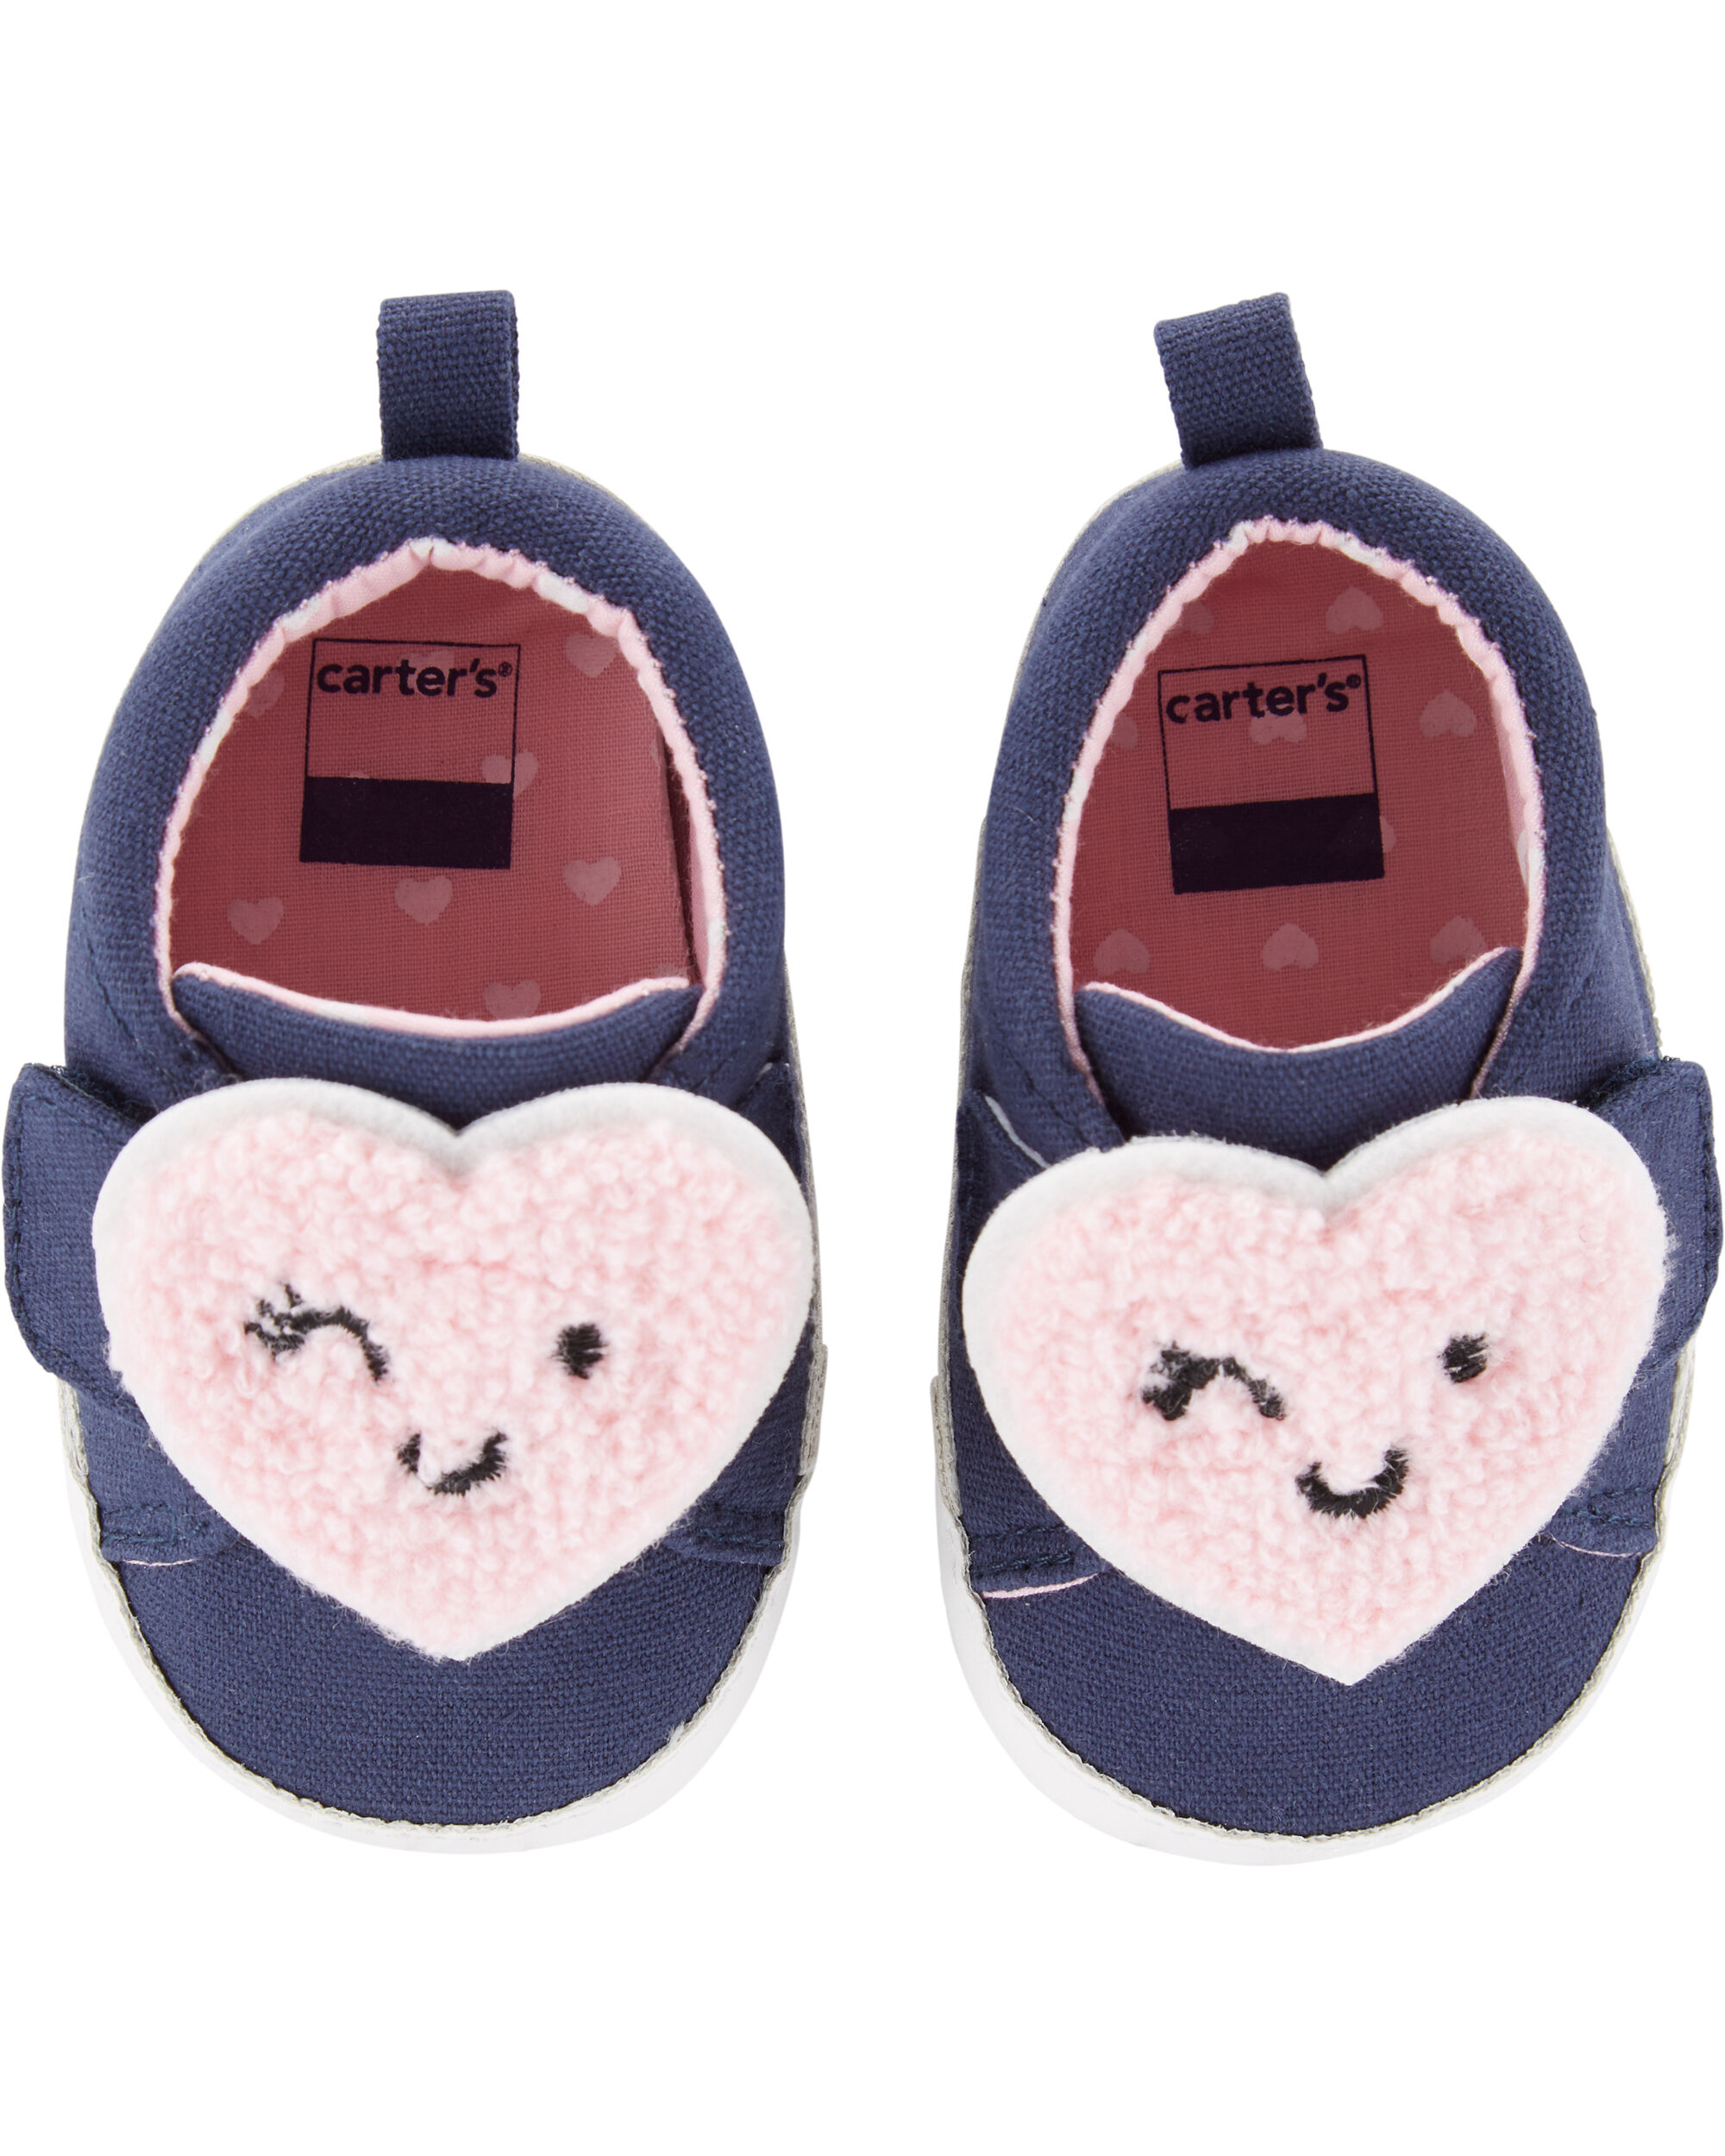 Carter's Heart Baby Shoes | carters.com